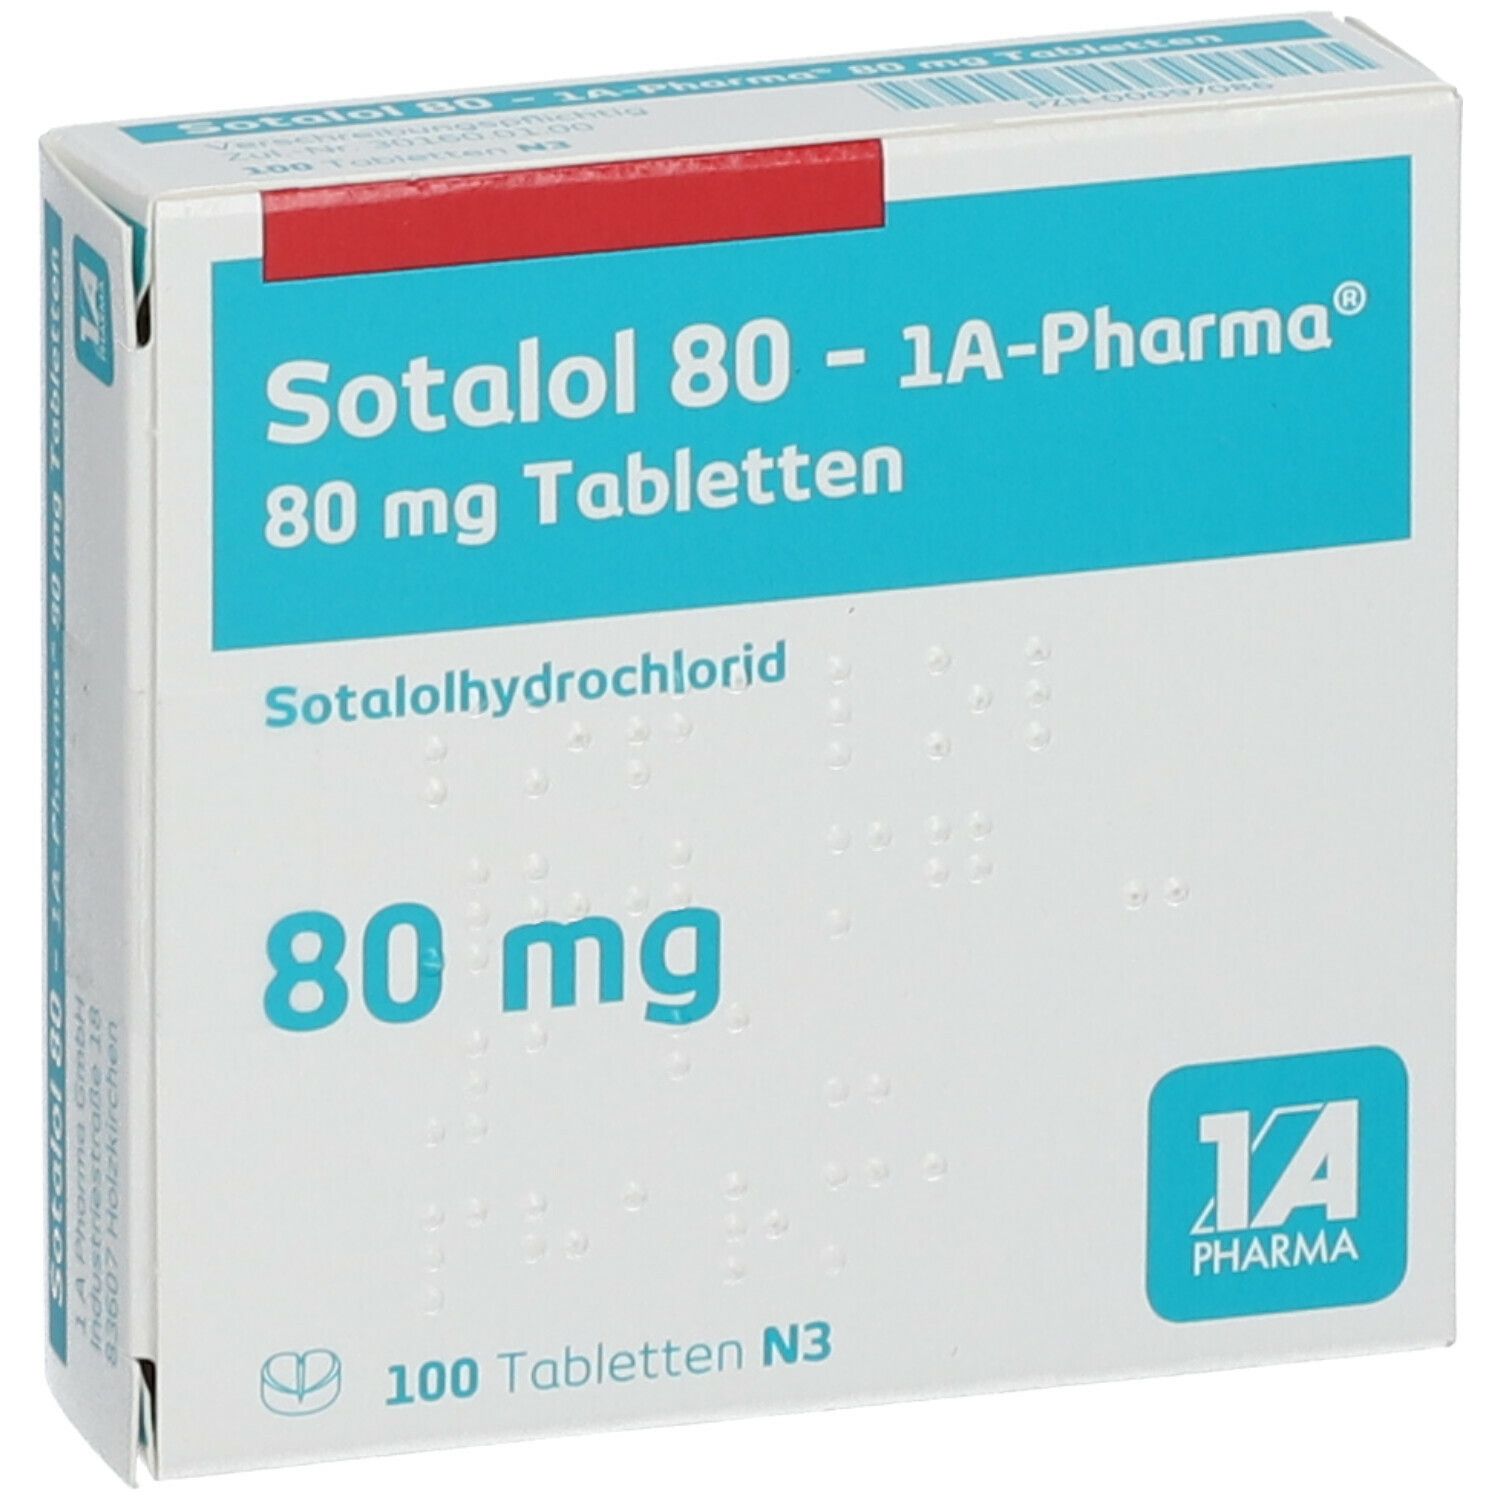 Sotalol 80 1A Pharma®